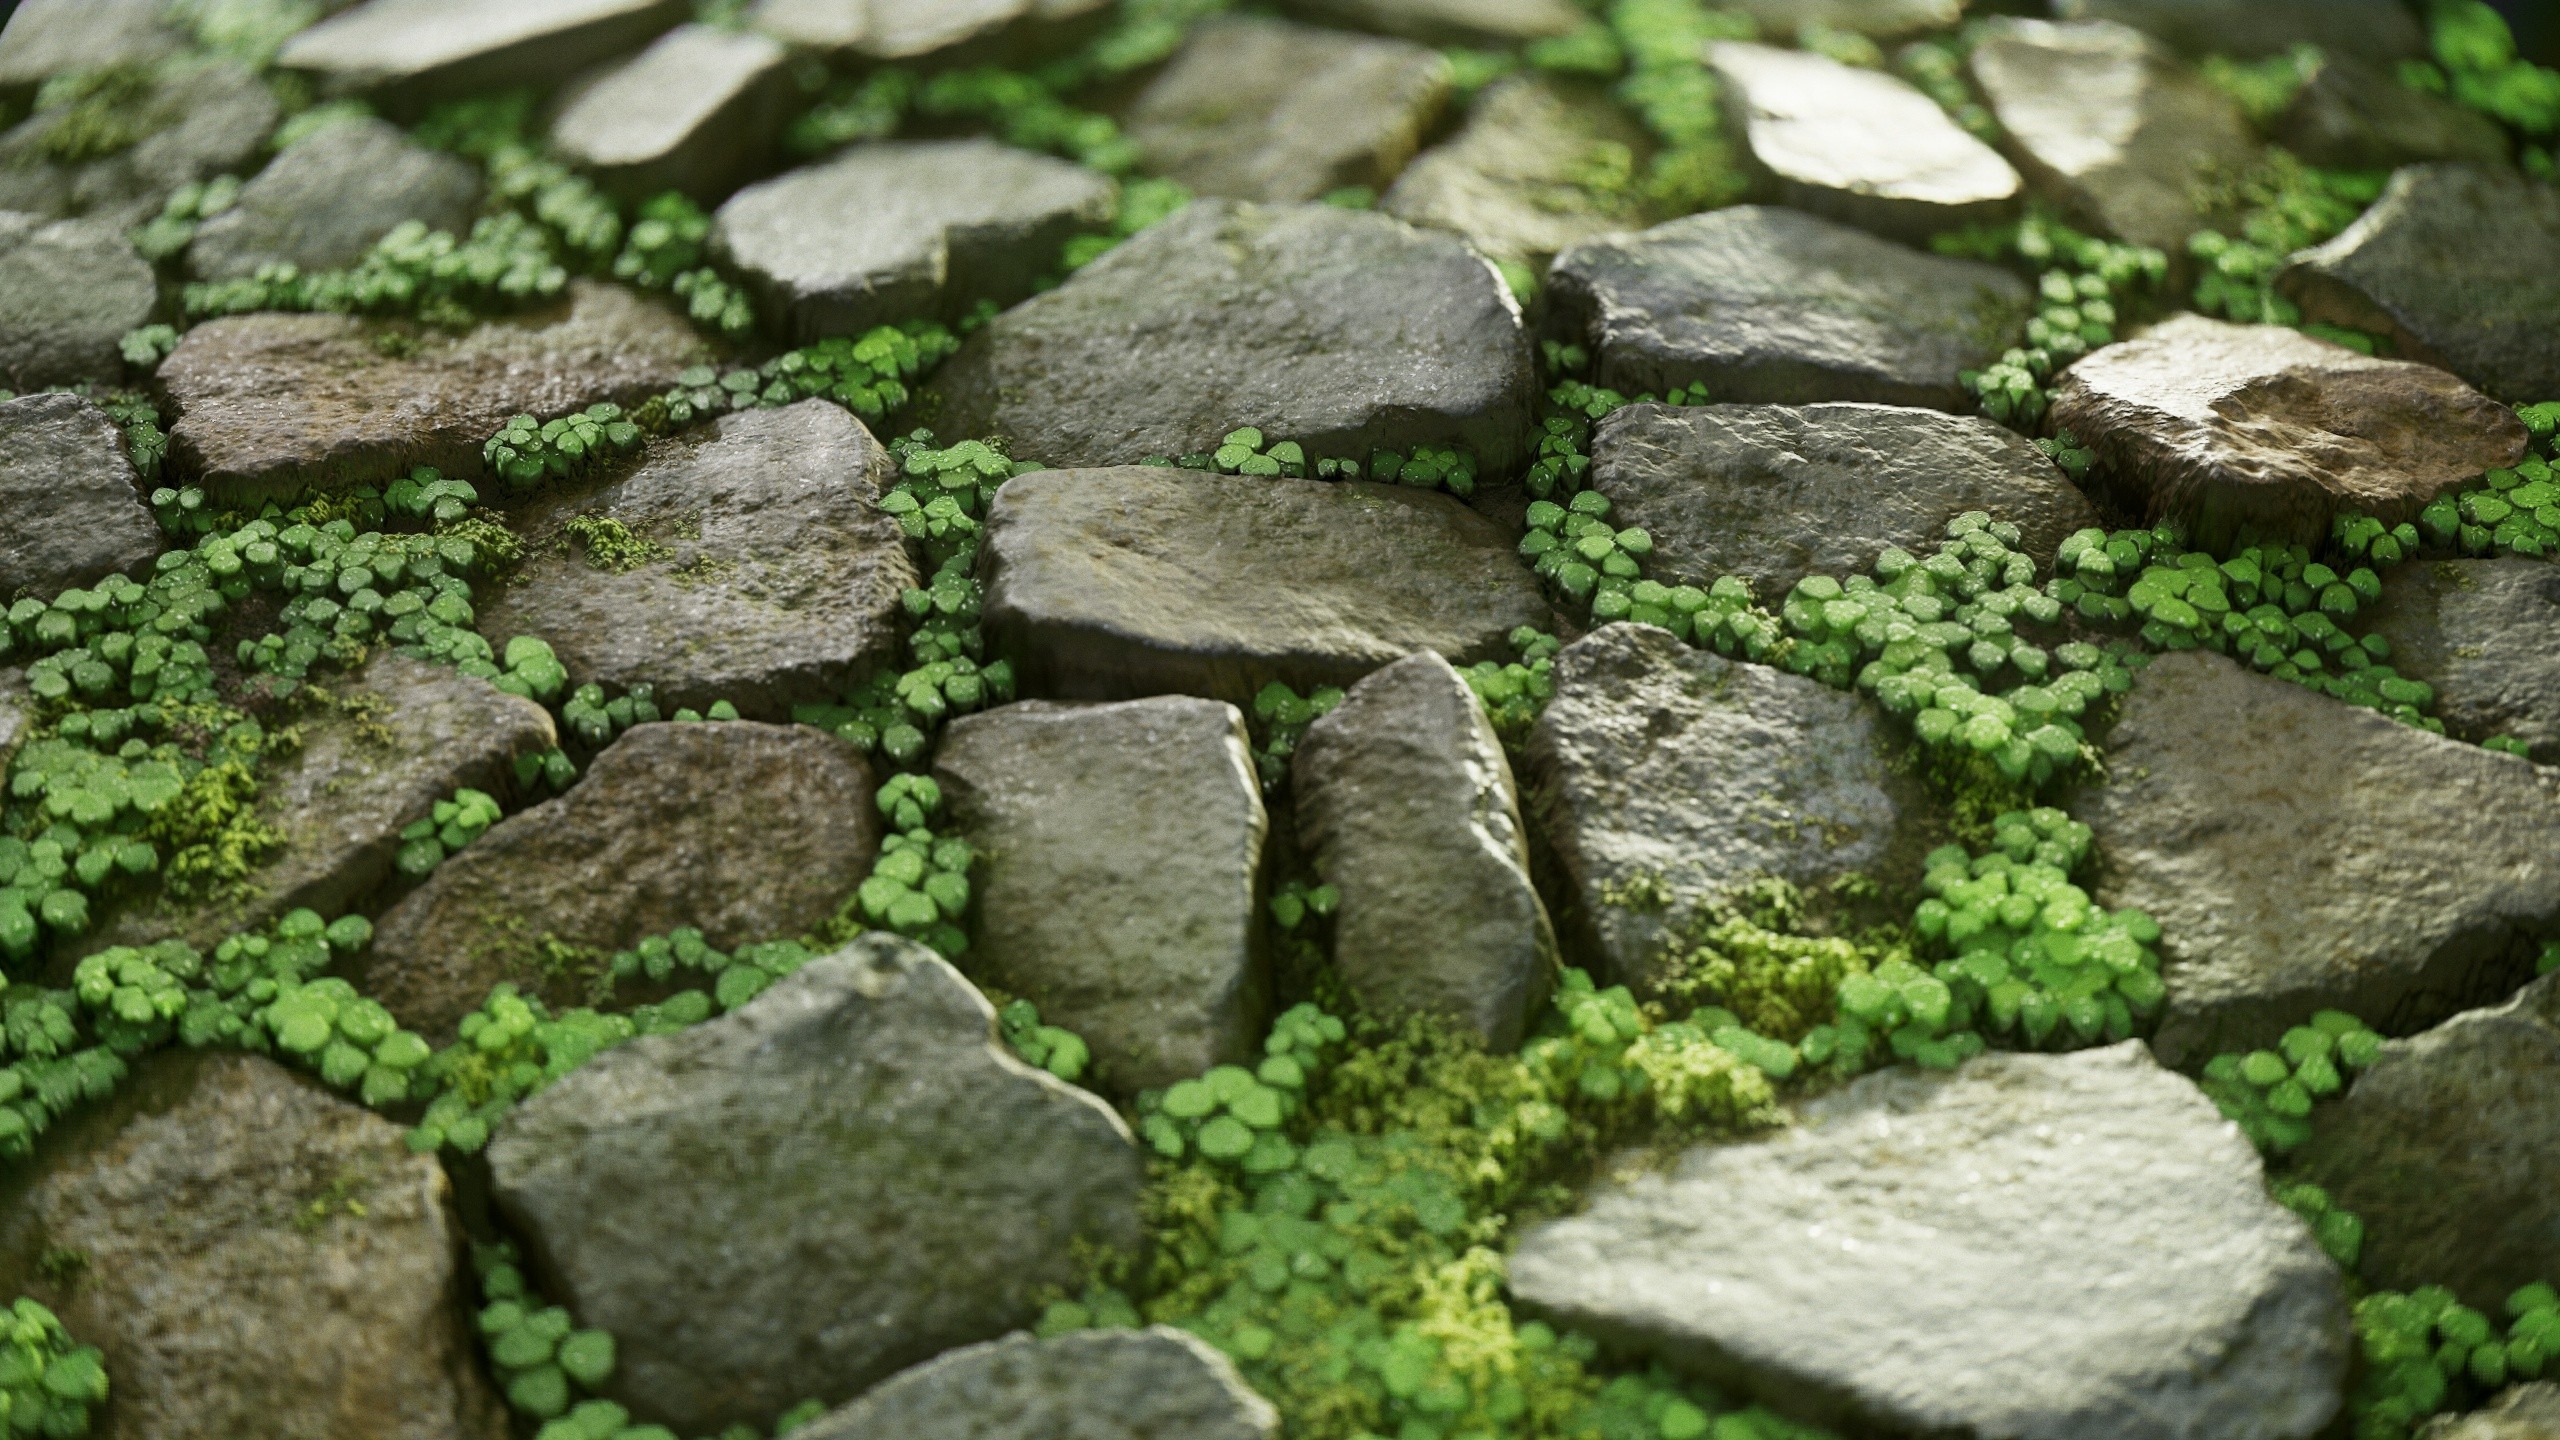 Grass Digital Art Cobblestone Rocks Nature Vasilina Sirotina Clovers Stones 2560x1440